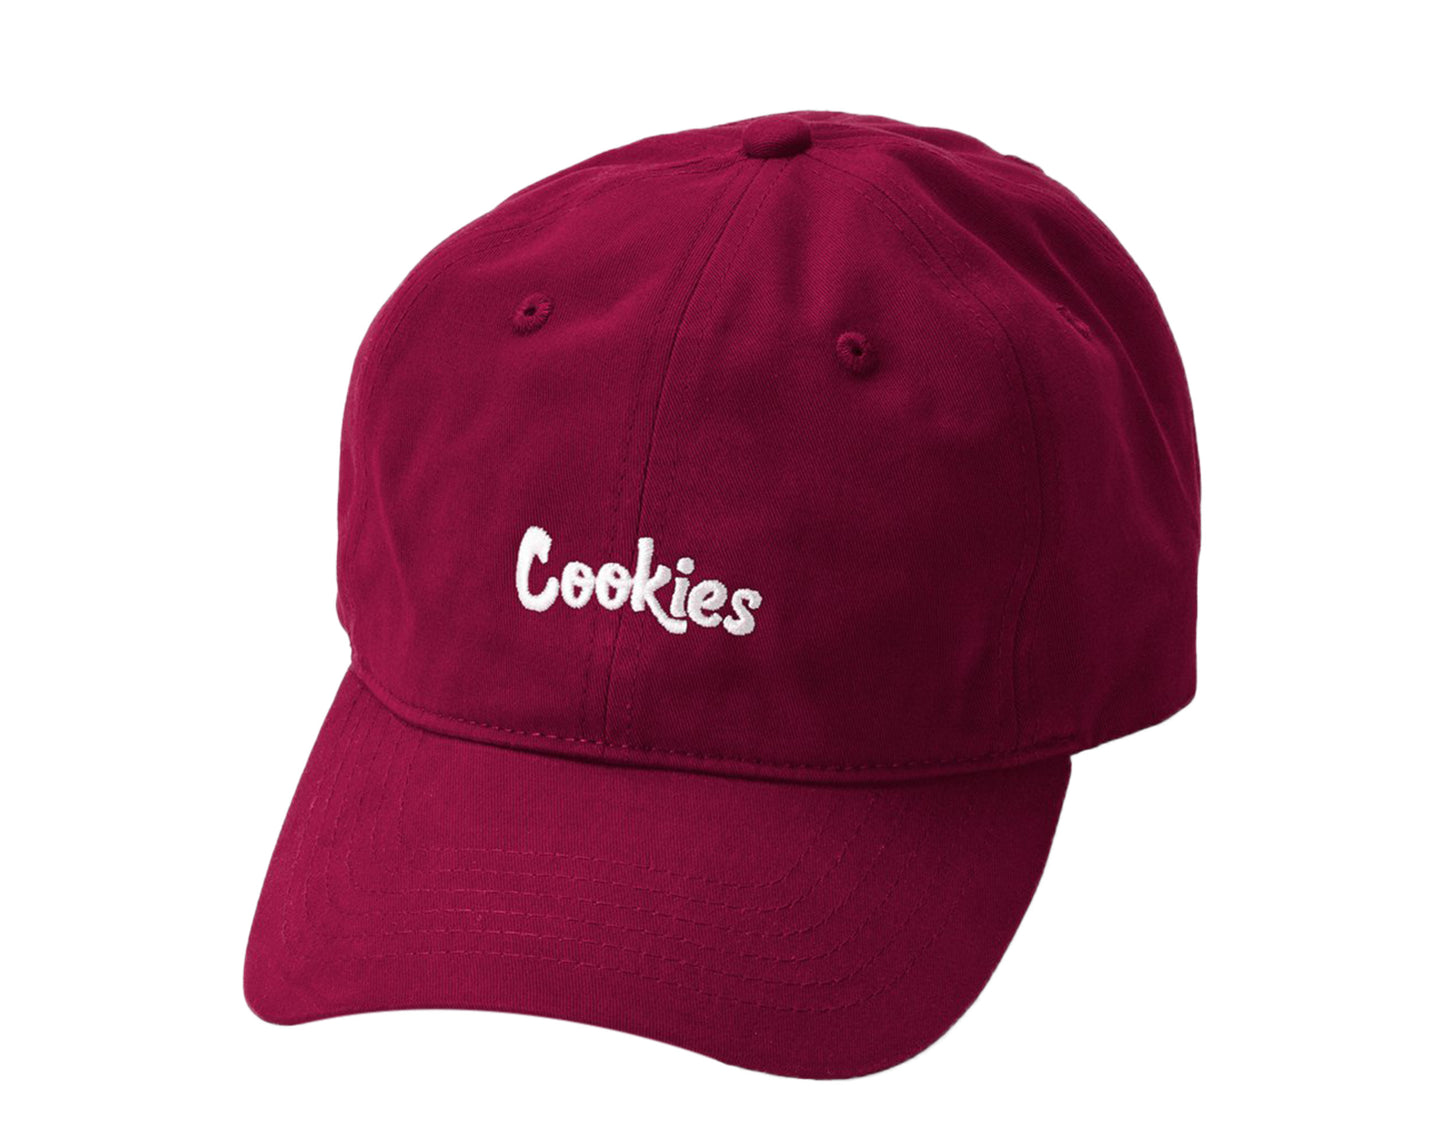 Cookies Original Logo Thin Mint Burgundy/Cream Dad Hat 1546X4389-BRC